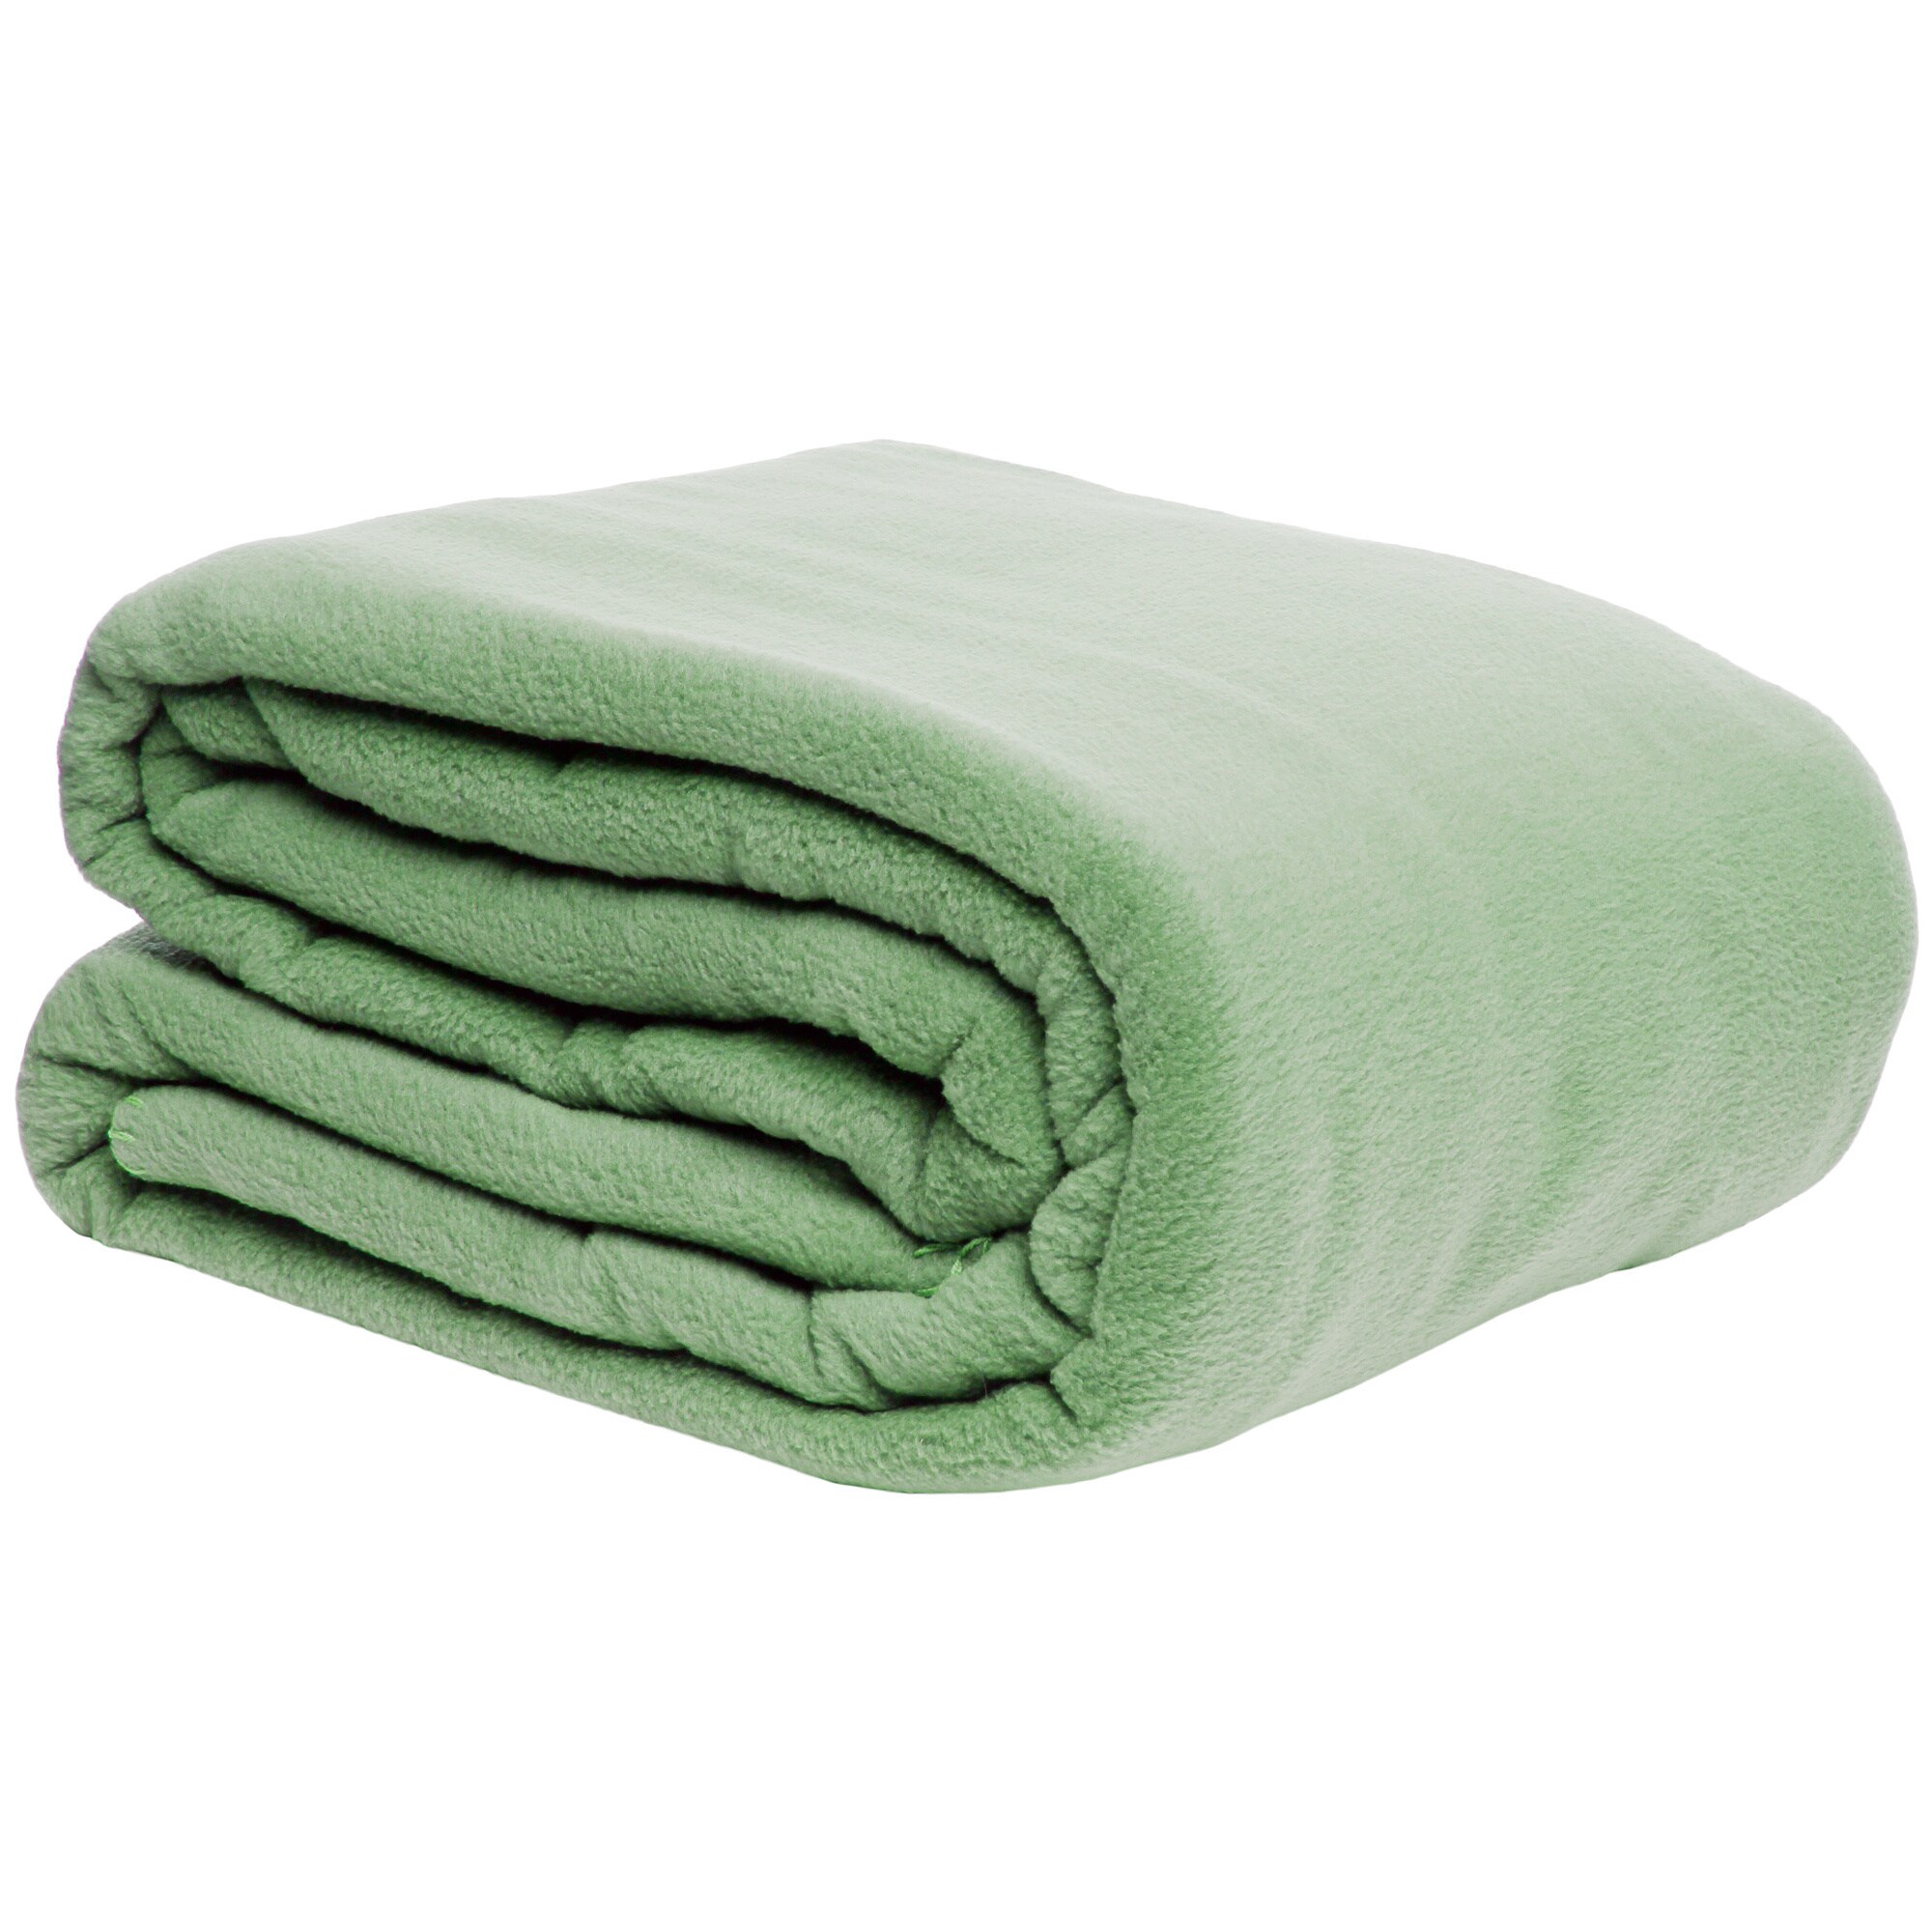 Supreme Warmth Fleece Blanket | eBay